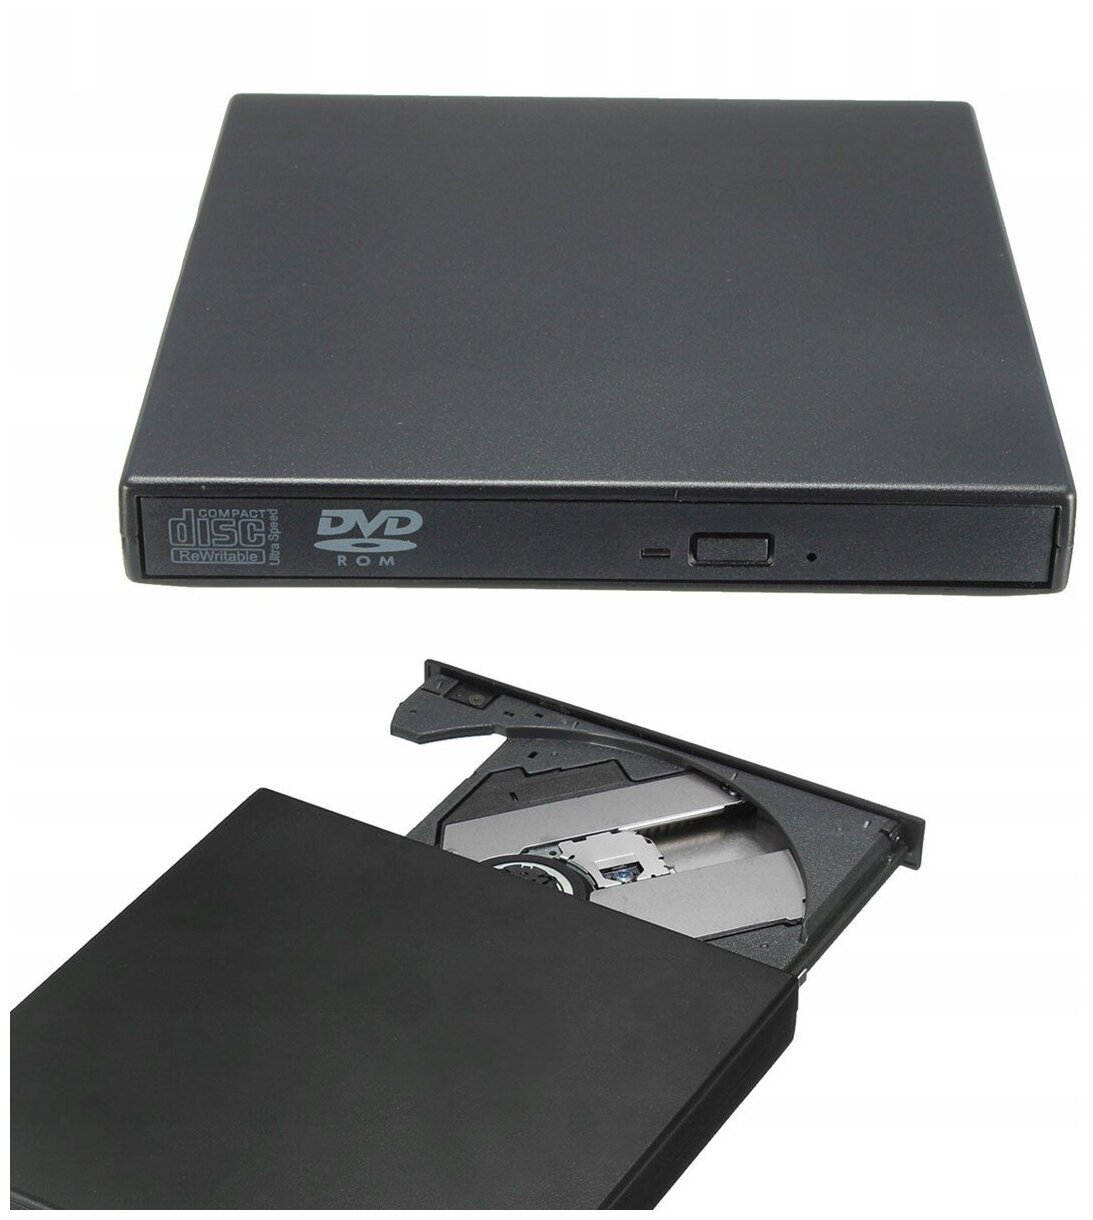 Внешний дисковод DVD - USB 20 - черного цвета